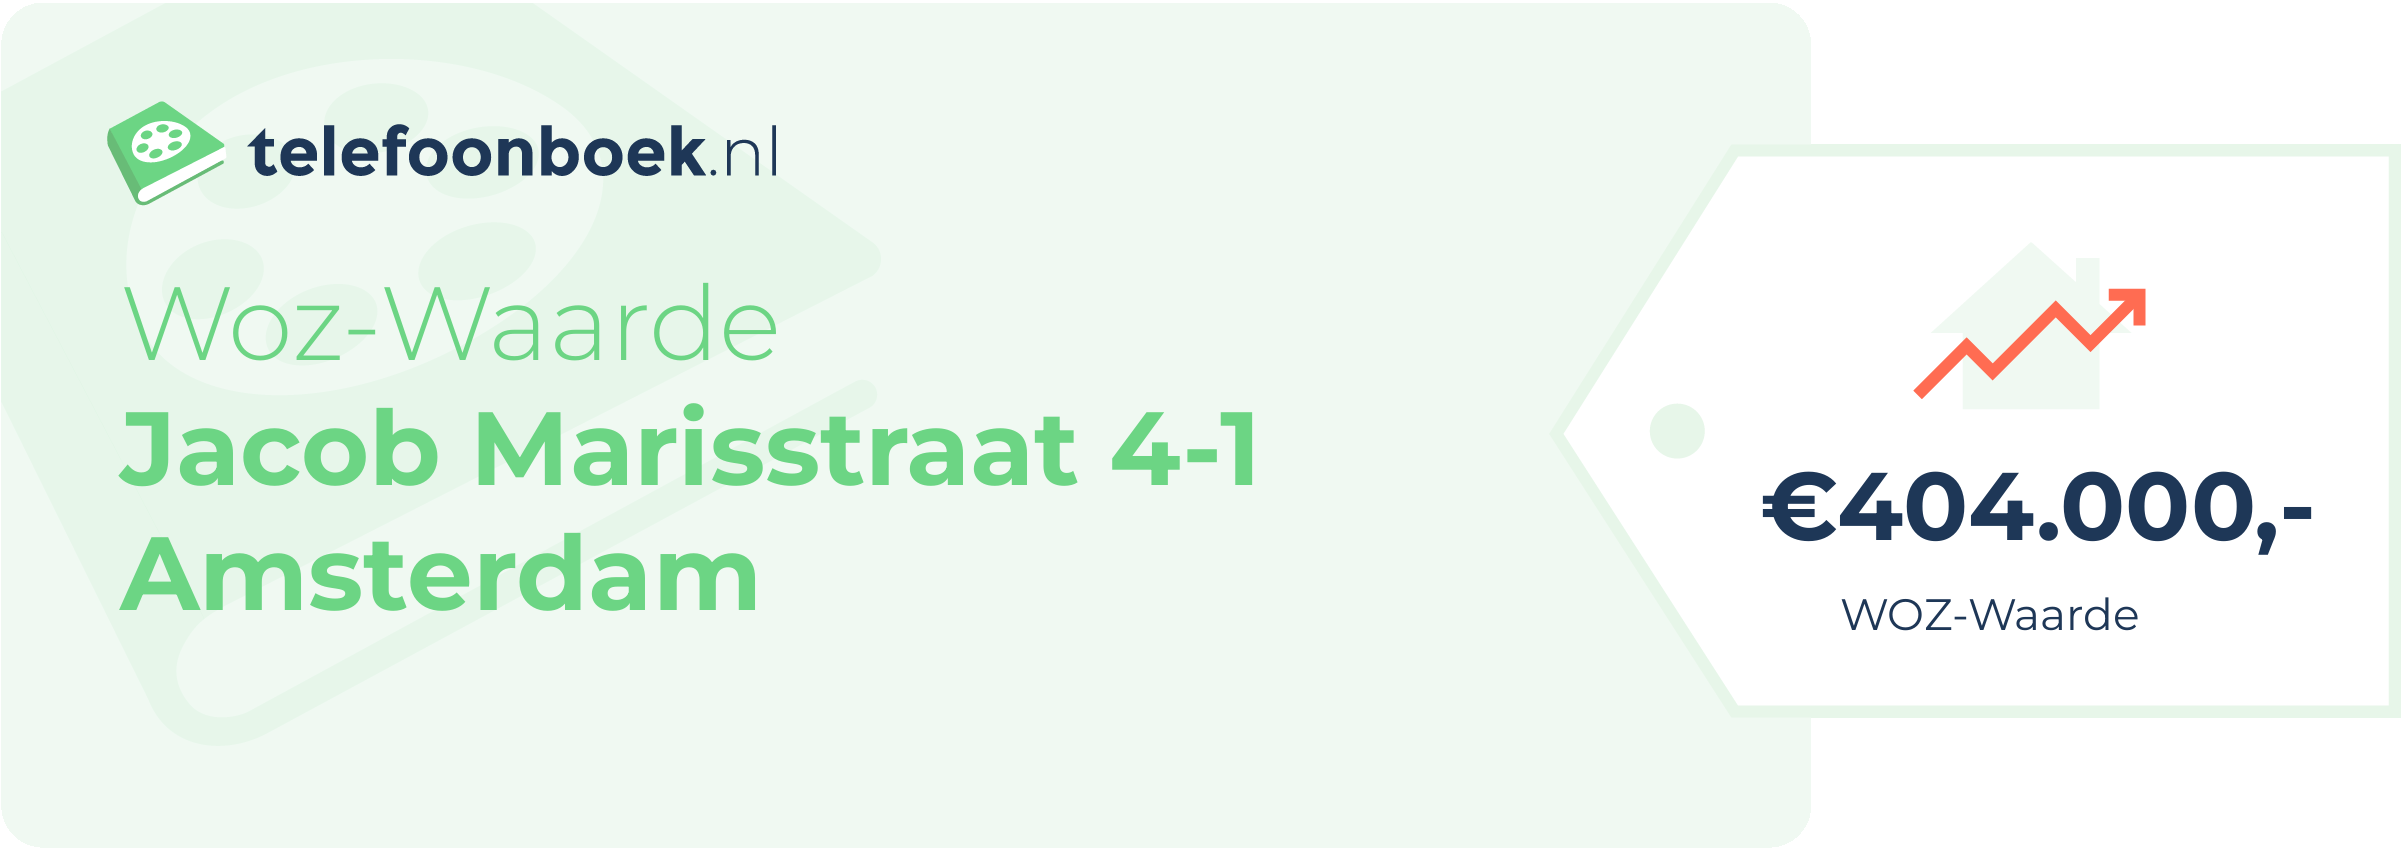 WOZ-waarde Jacob Marisstraat 4-1 Amsterdam